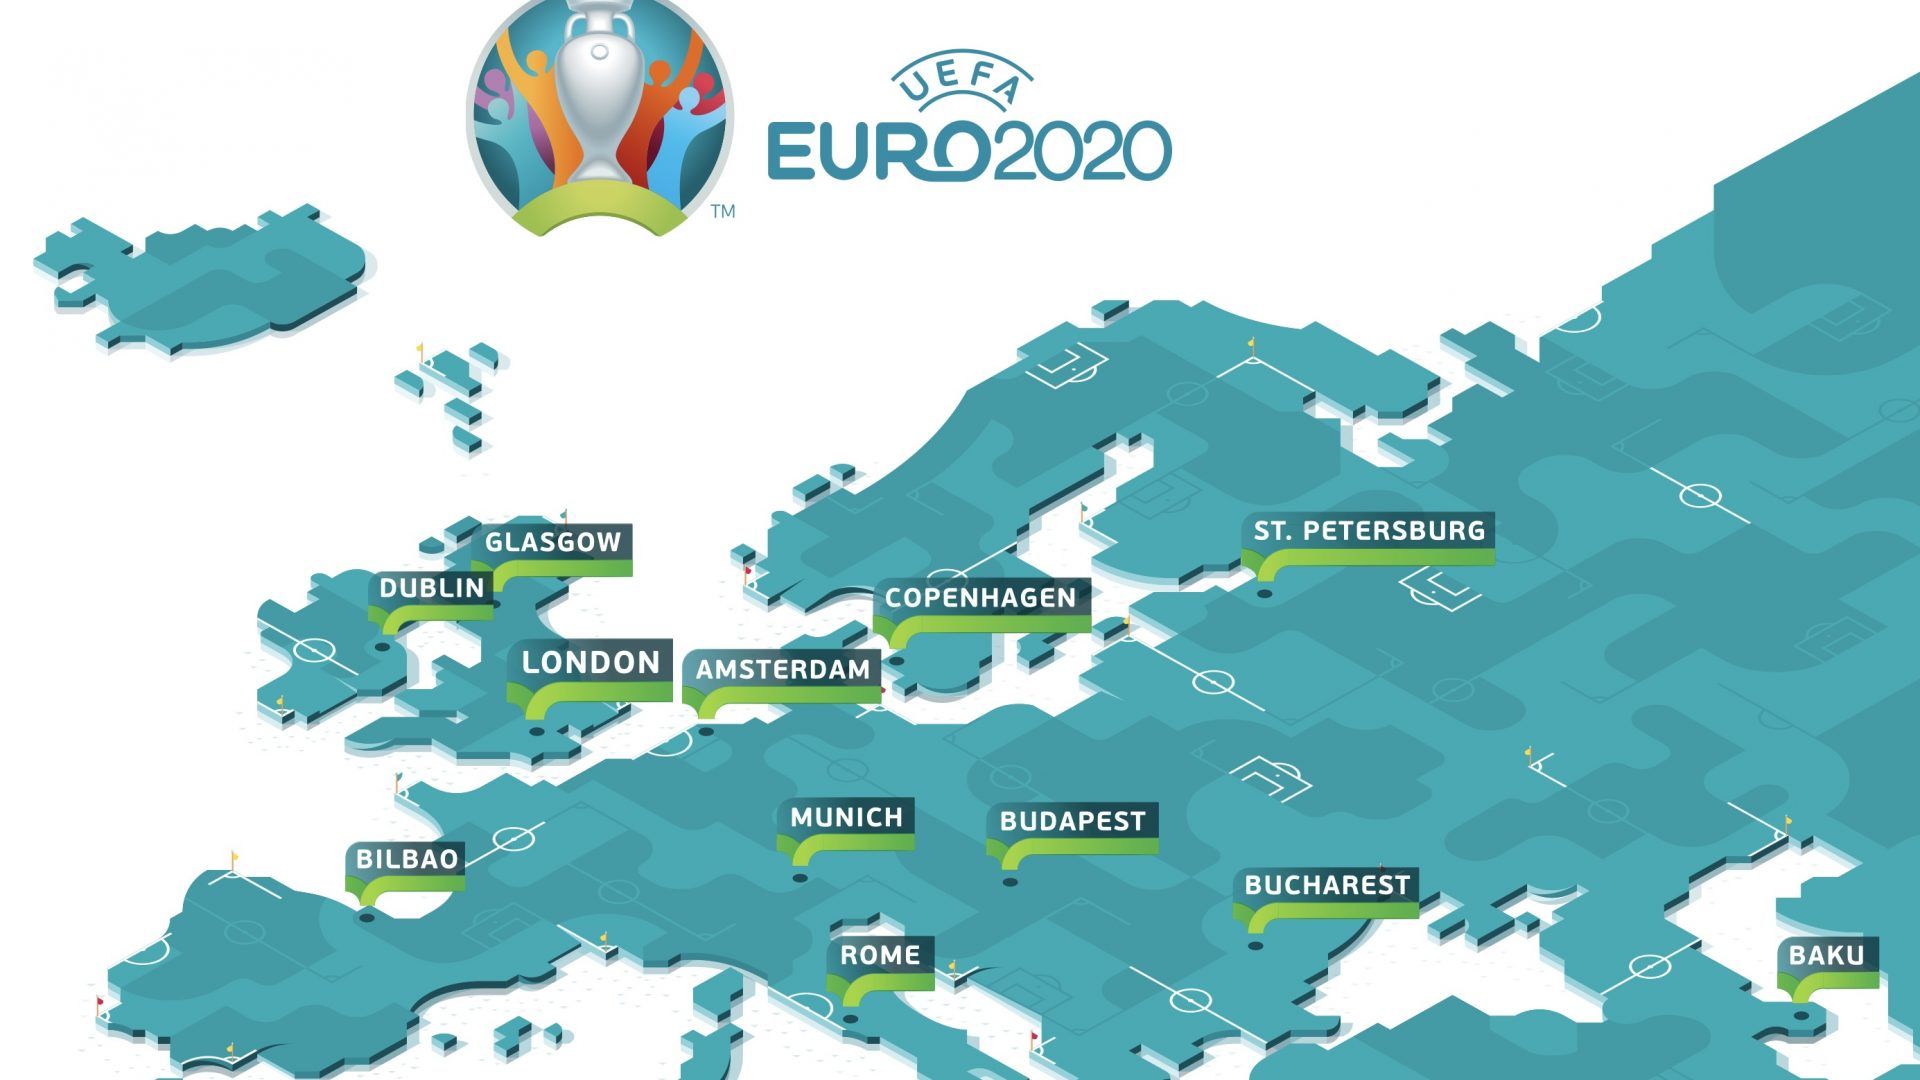 Bidding open for EURO 2020 sponsorship packages